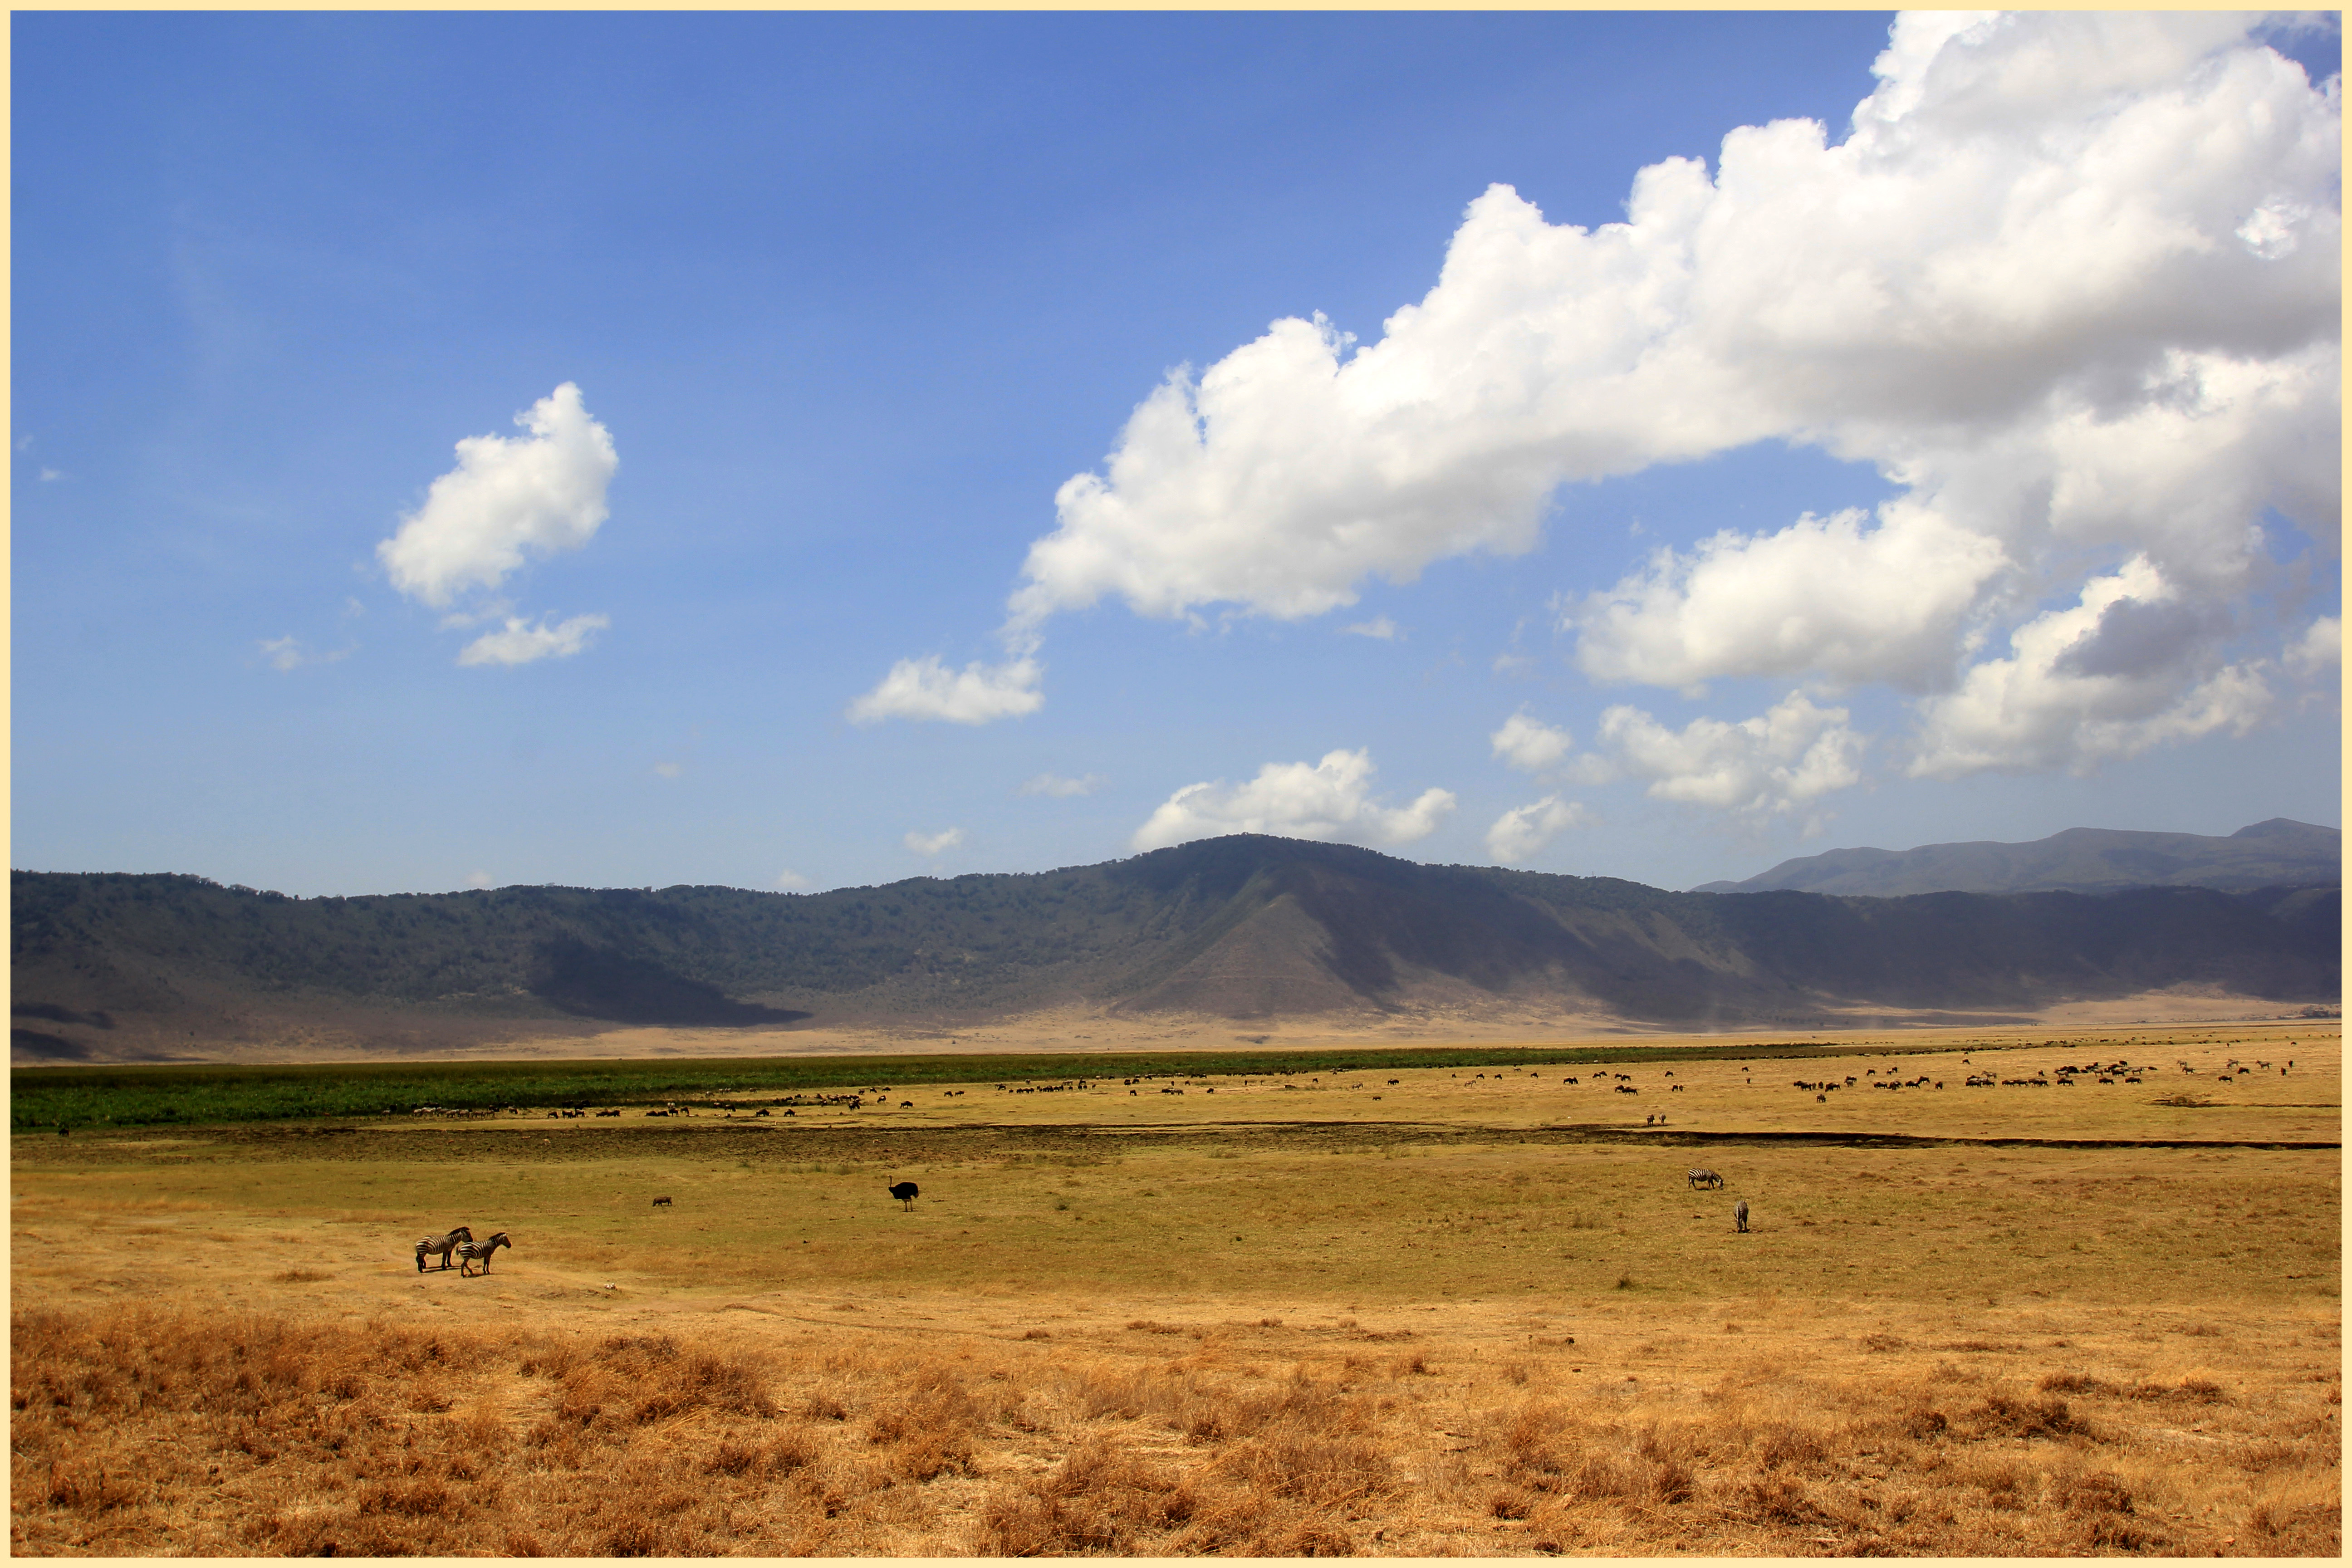 Displaying Image For African Grasslands Background